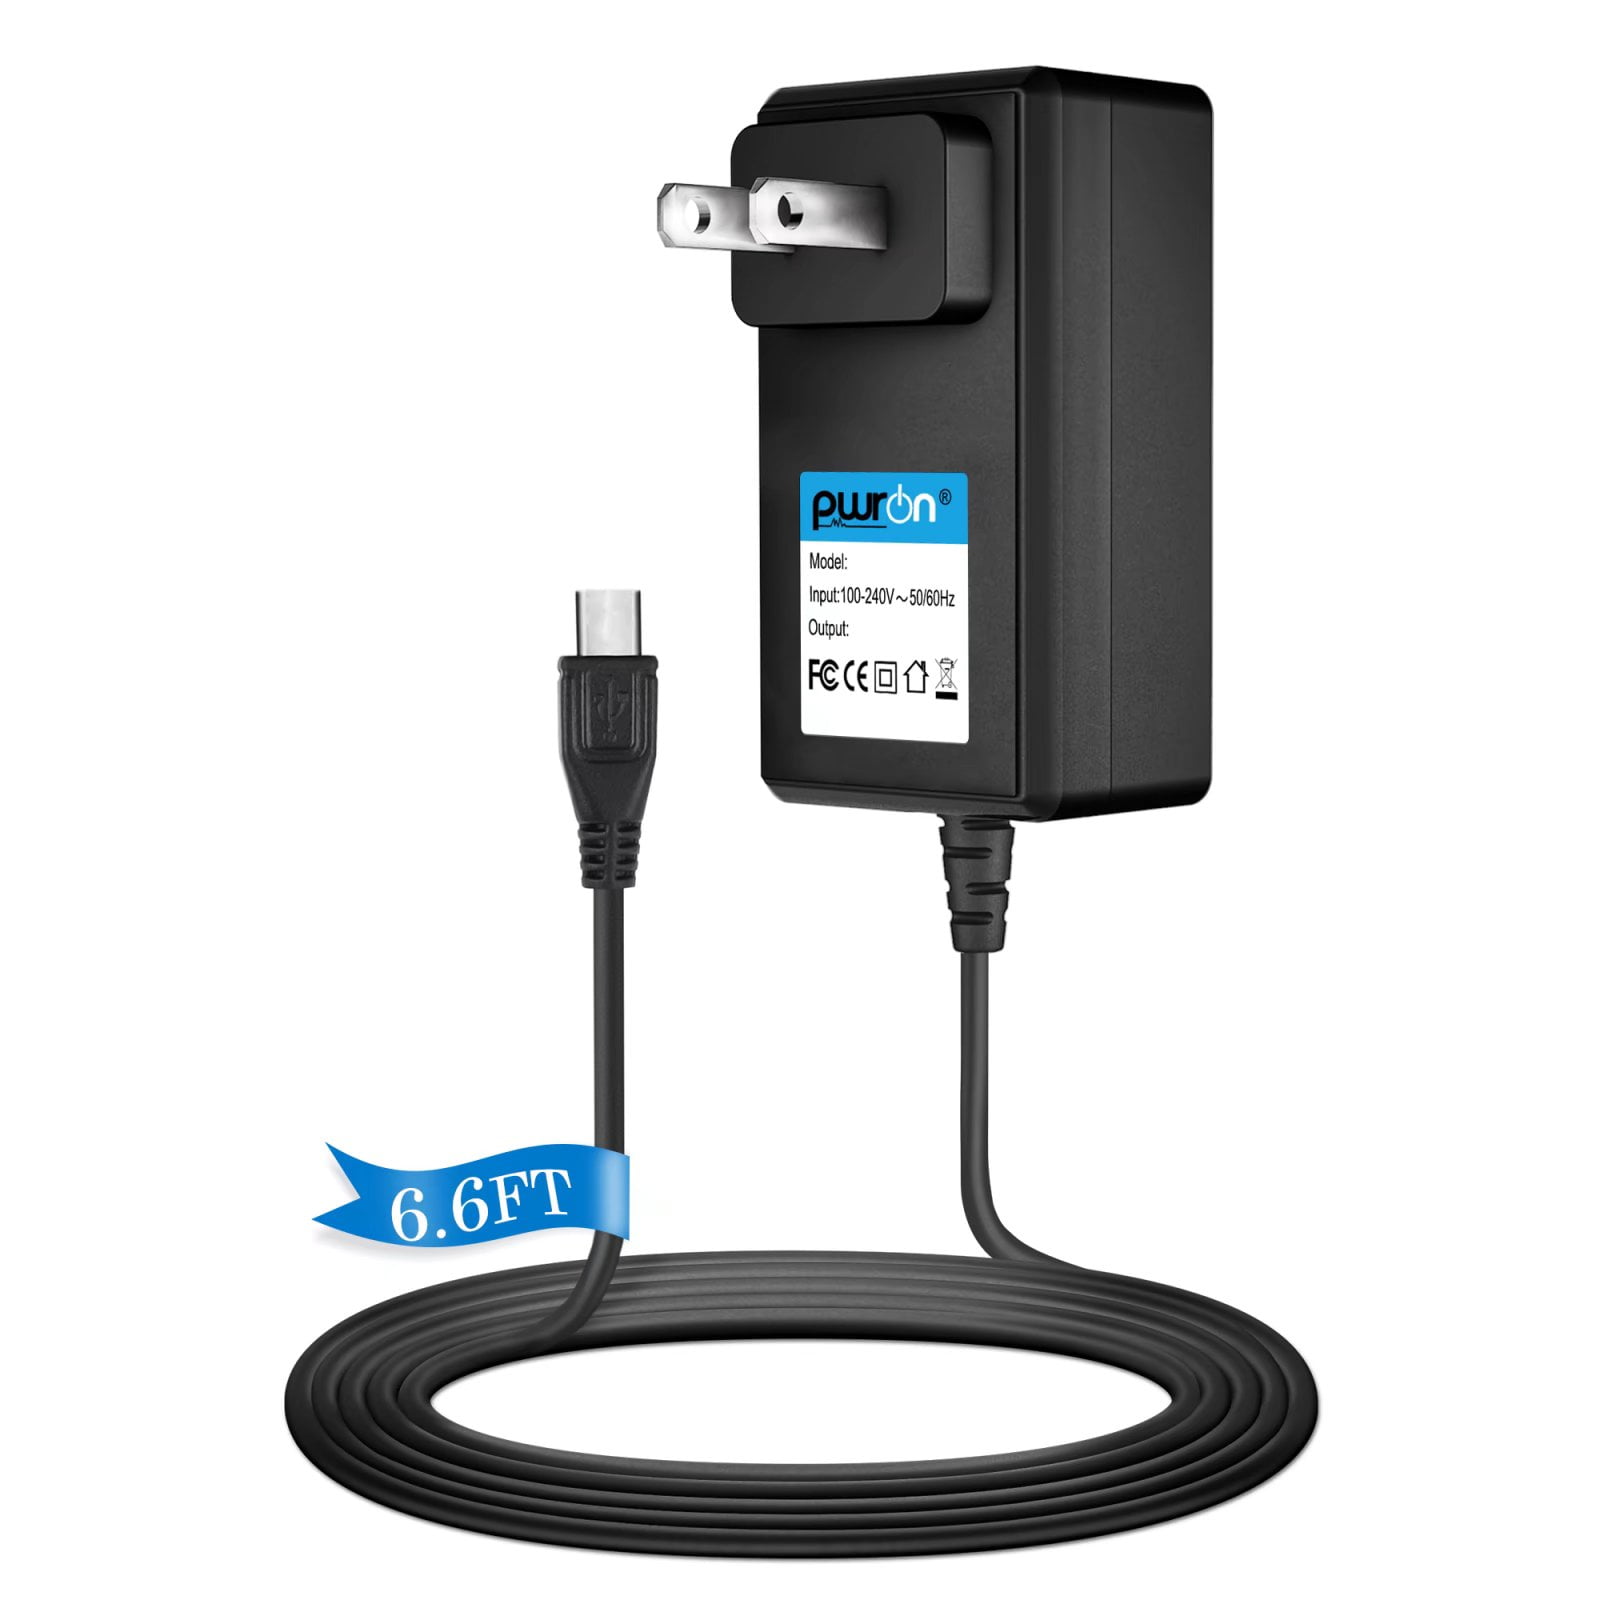 Instrument olie Behoren PwrON AC Adapter Mini USB Charger Replacement for Garmin Dash 10 20 Mobius  Action Cam G1w G1w-c - Walmart.com